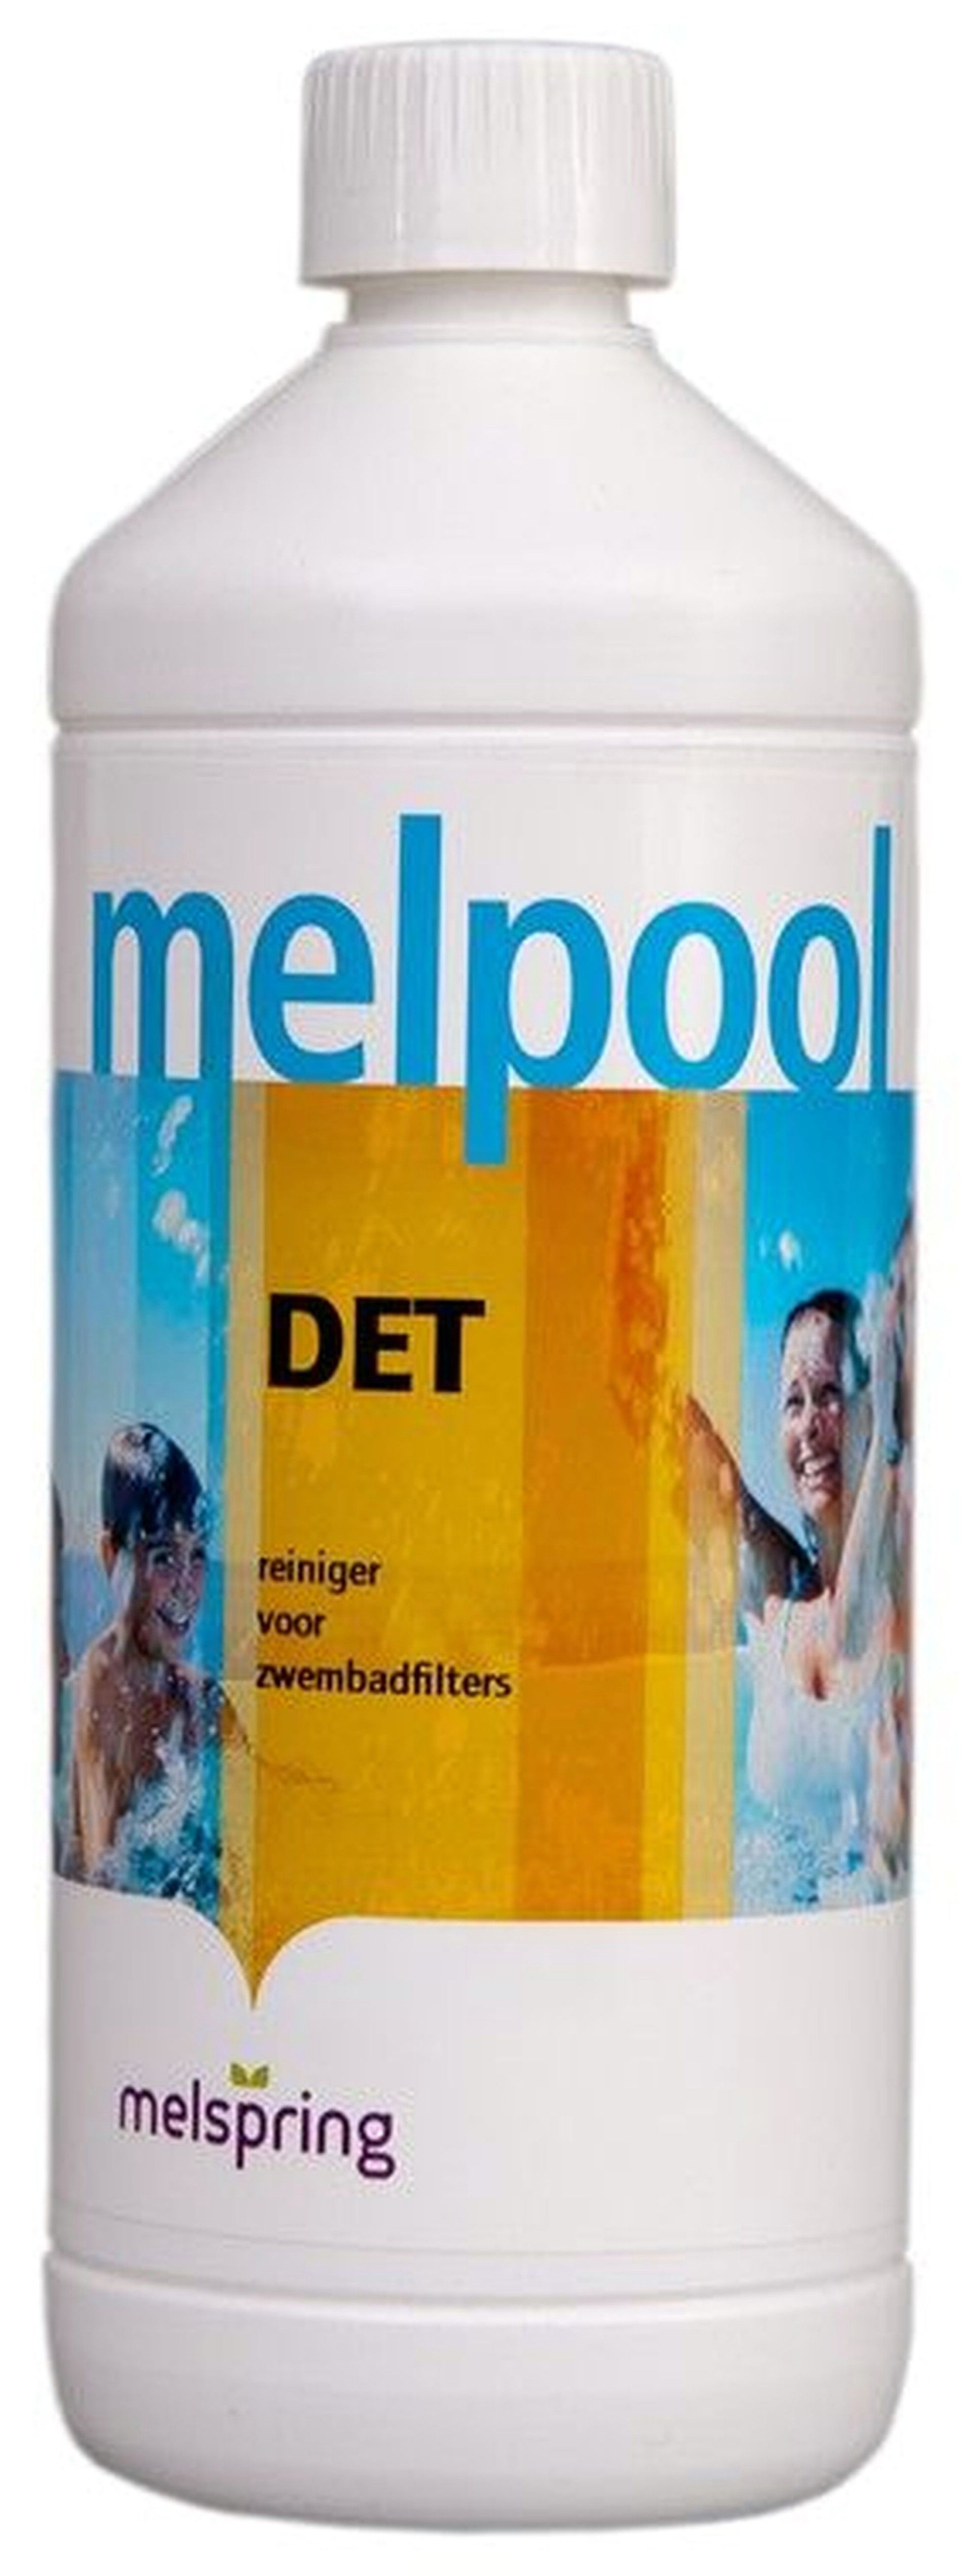 Foto van Melpool DET filterreiniger 1 liter